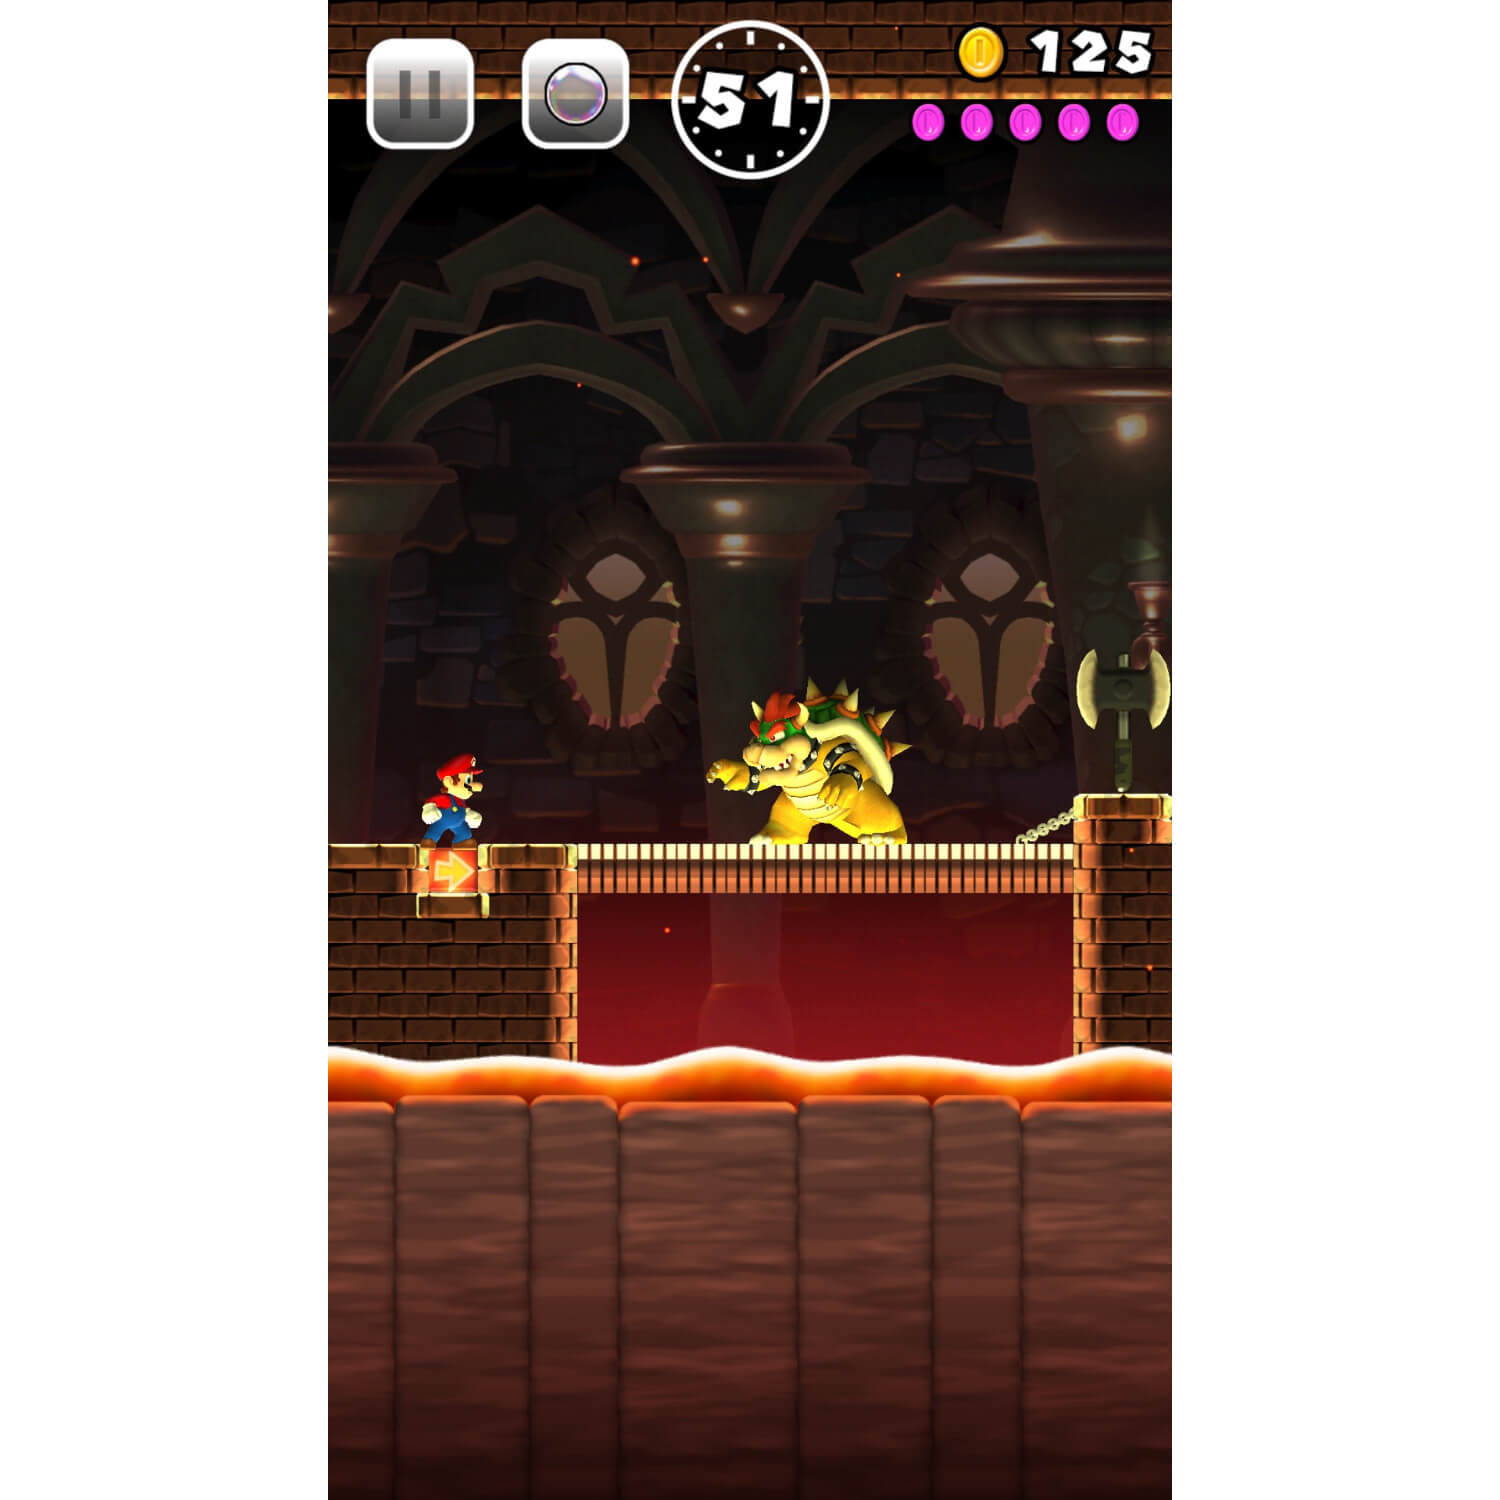 Screenshot de Super Mario Run